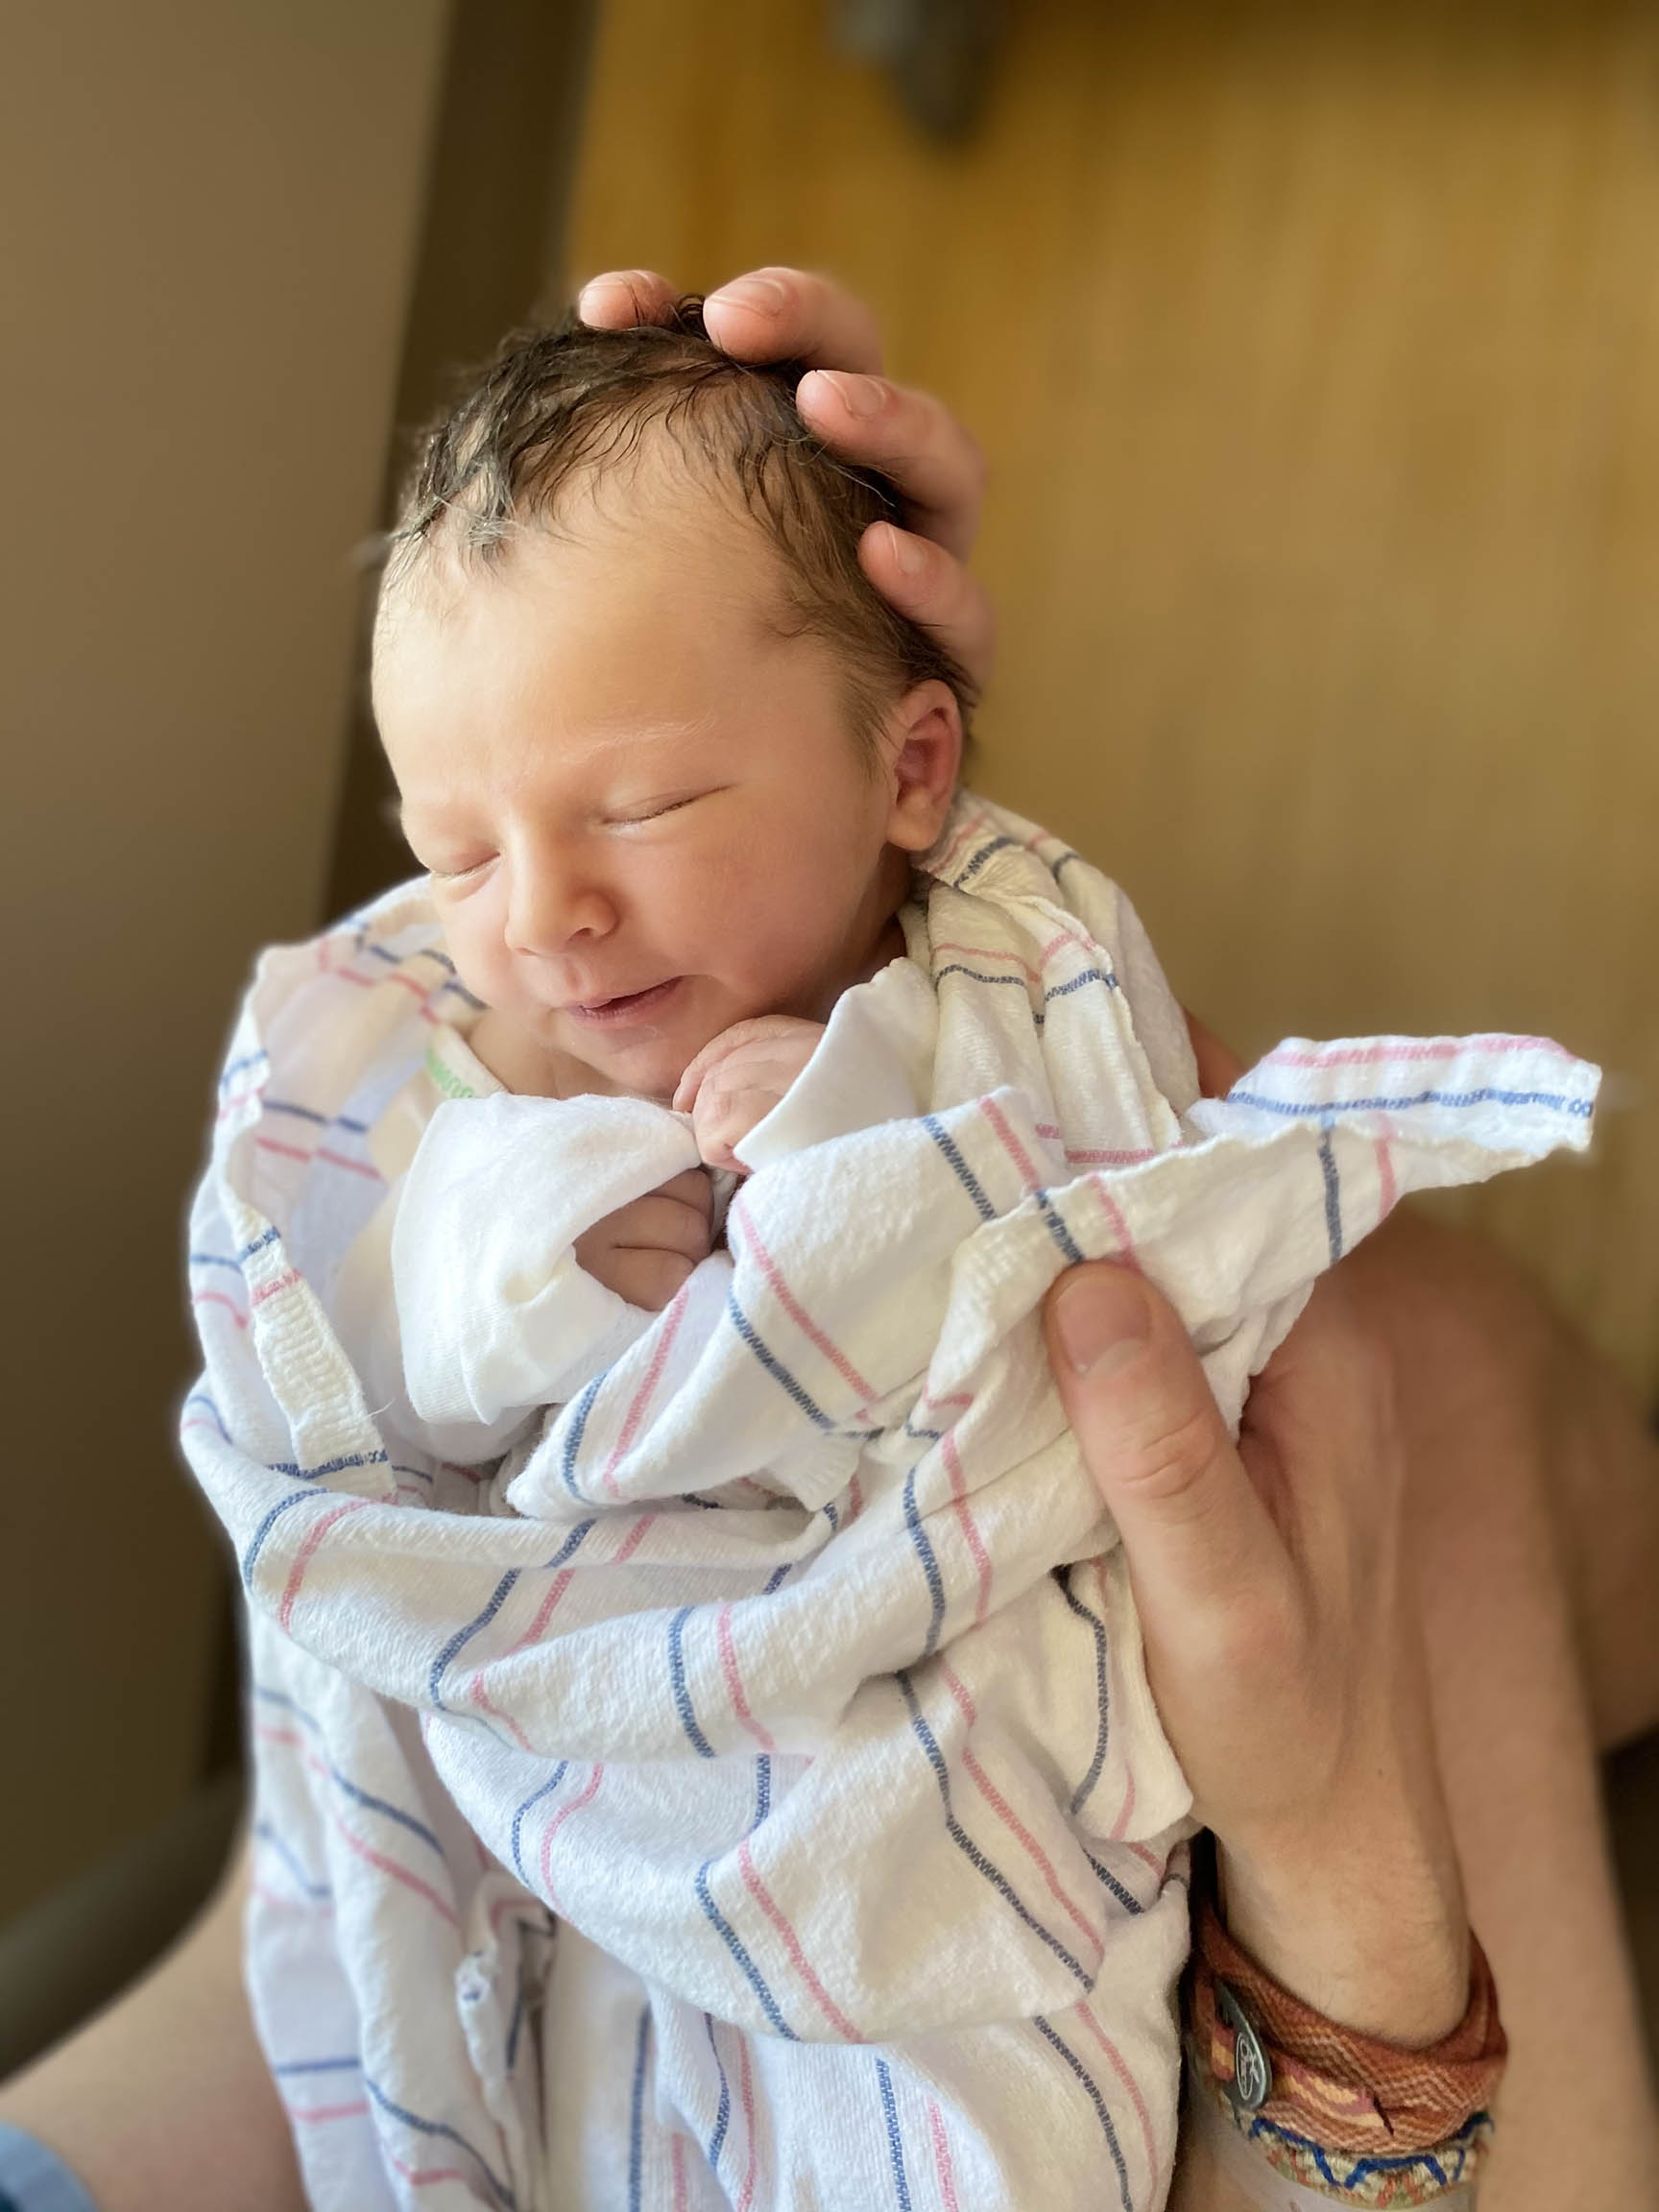 A newborn baby, William Patrick Cottle Hunt